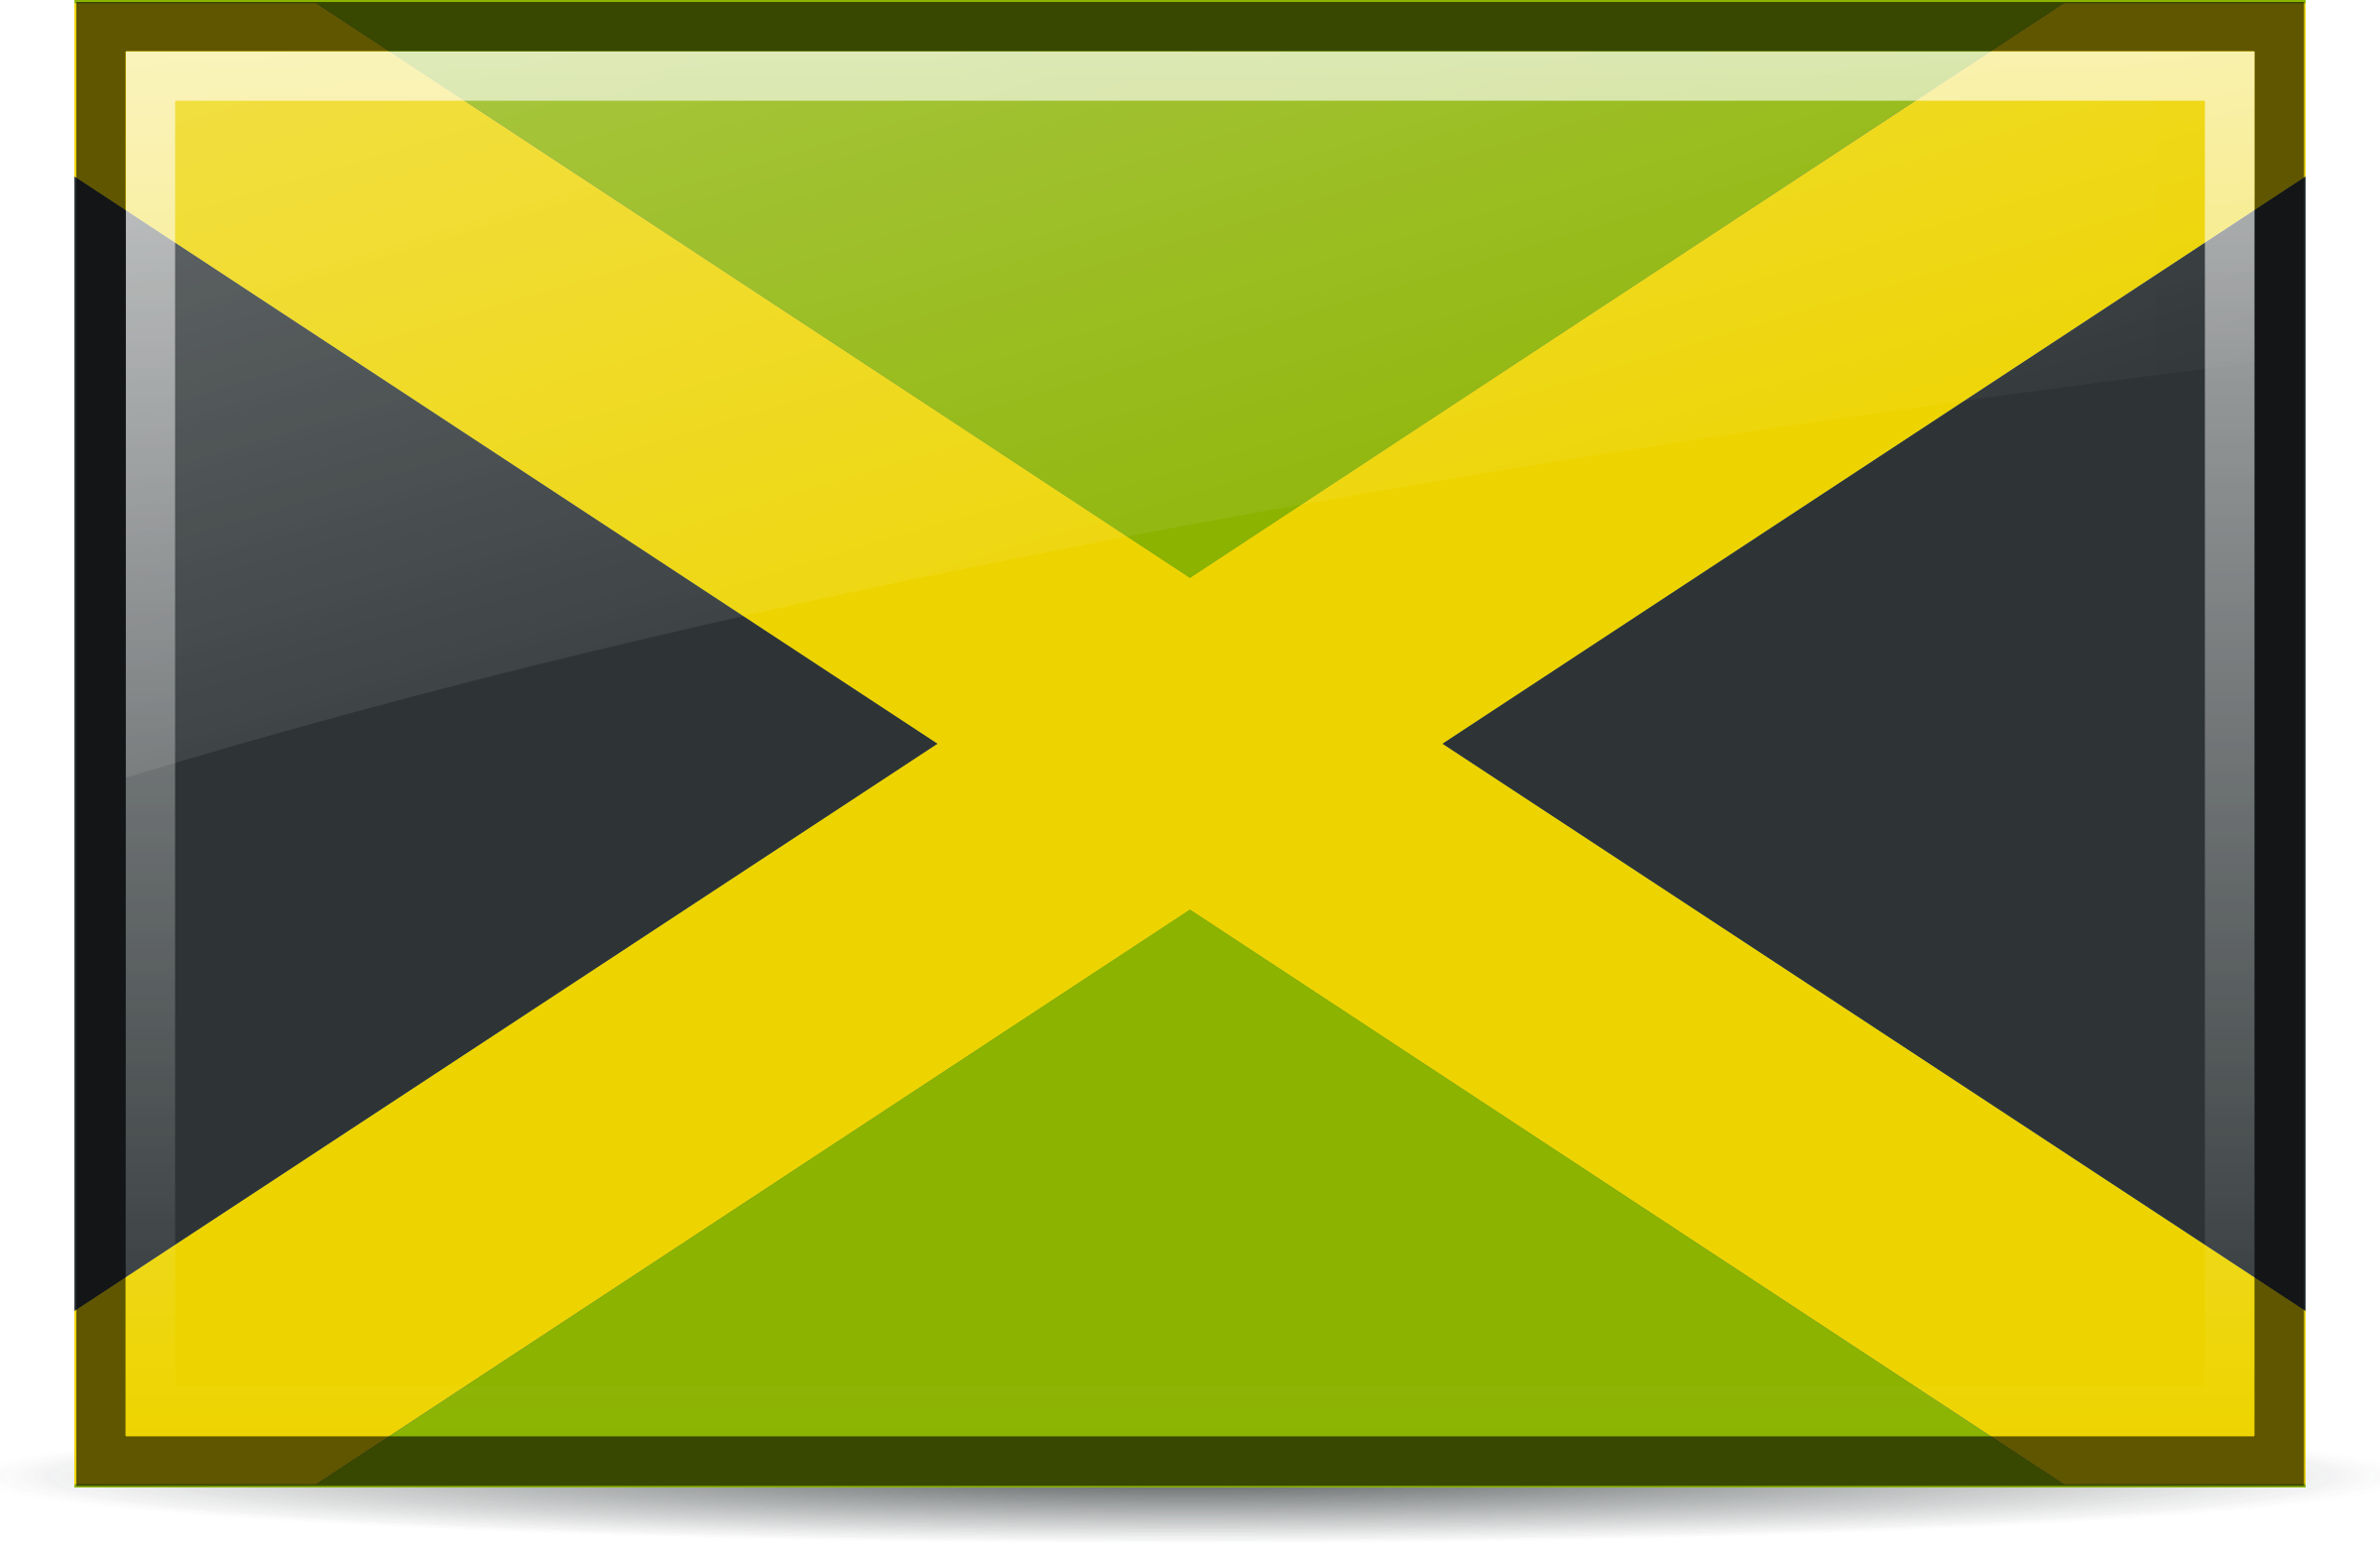 Флаг Ямайки. Флаг Джамайка. Флаг с желтым крестом. Зеленый флаг с желтым крестом.